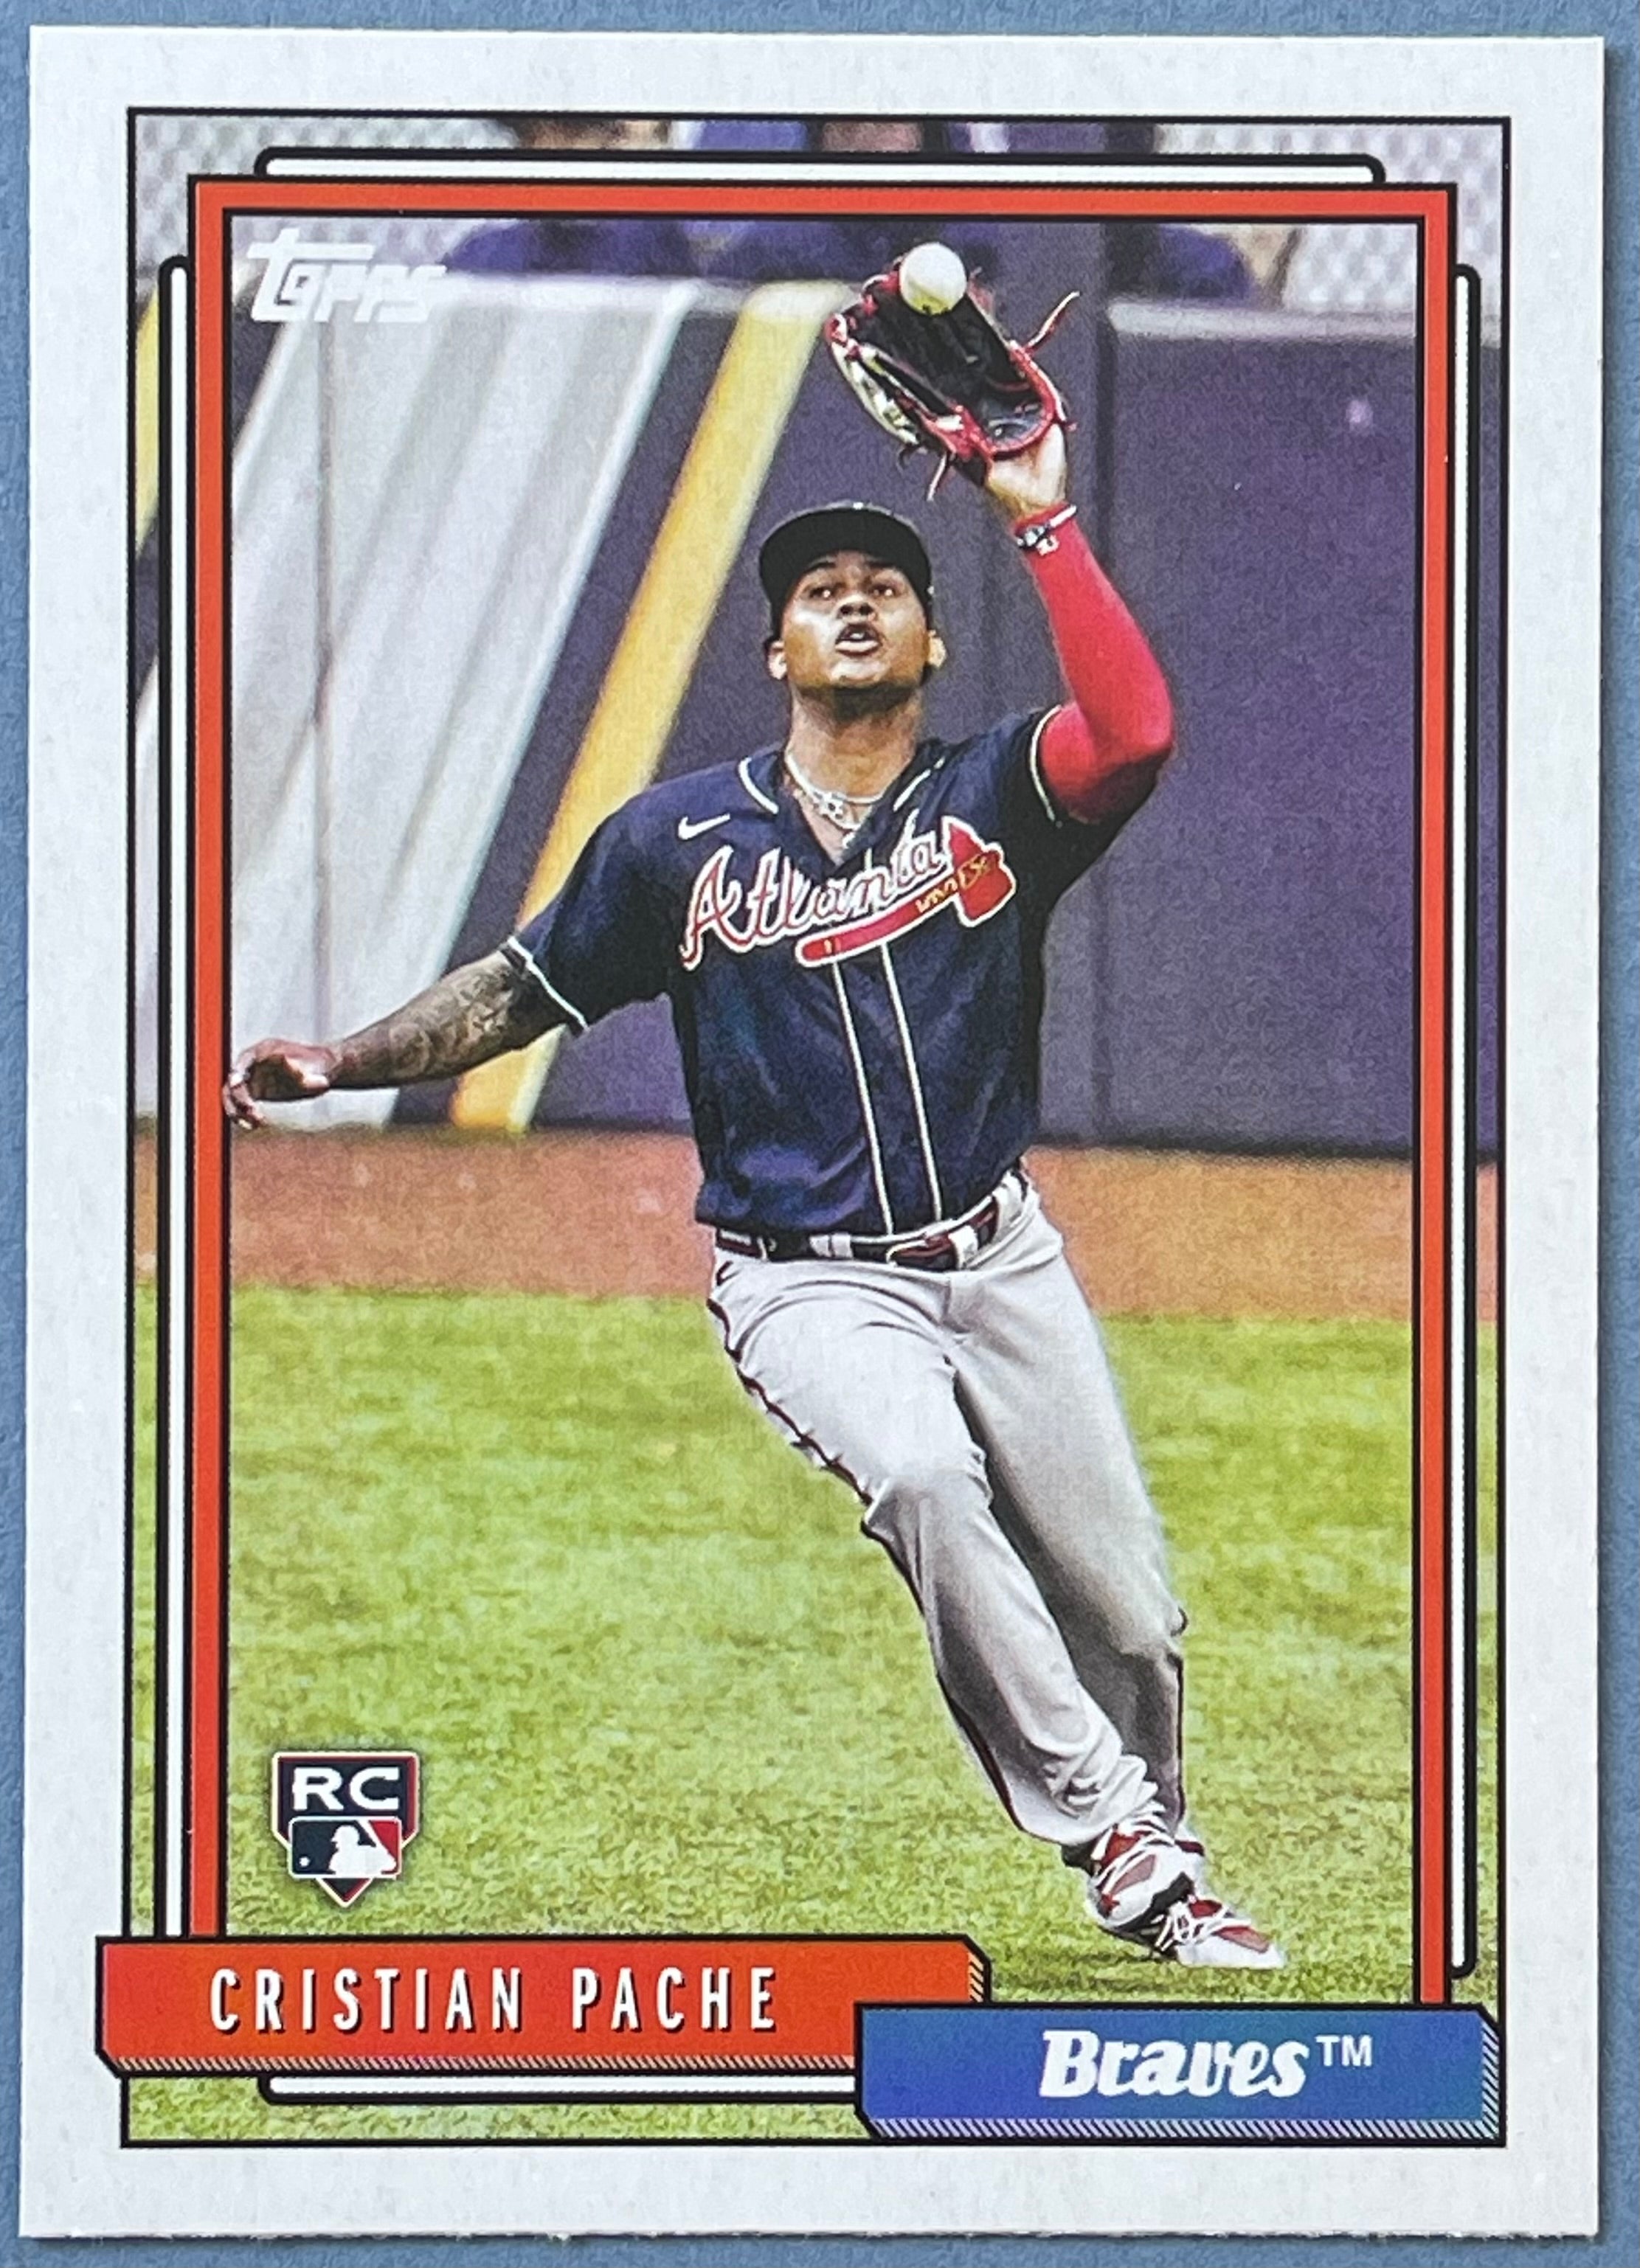 Cristian Pache - MLB TOPPS NOW® Card 139 - Print Run: 1805